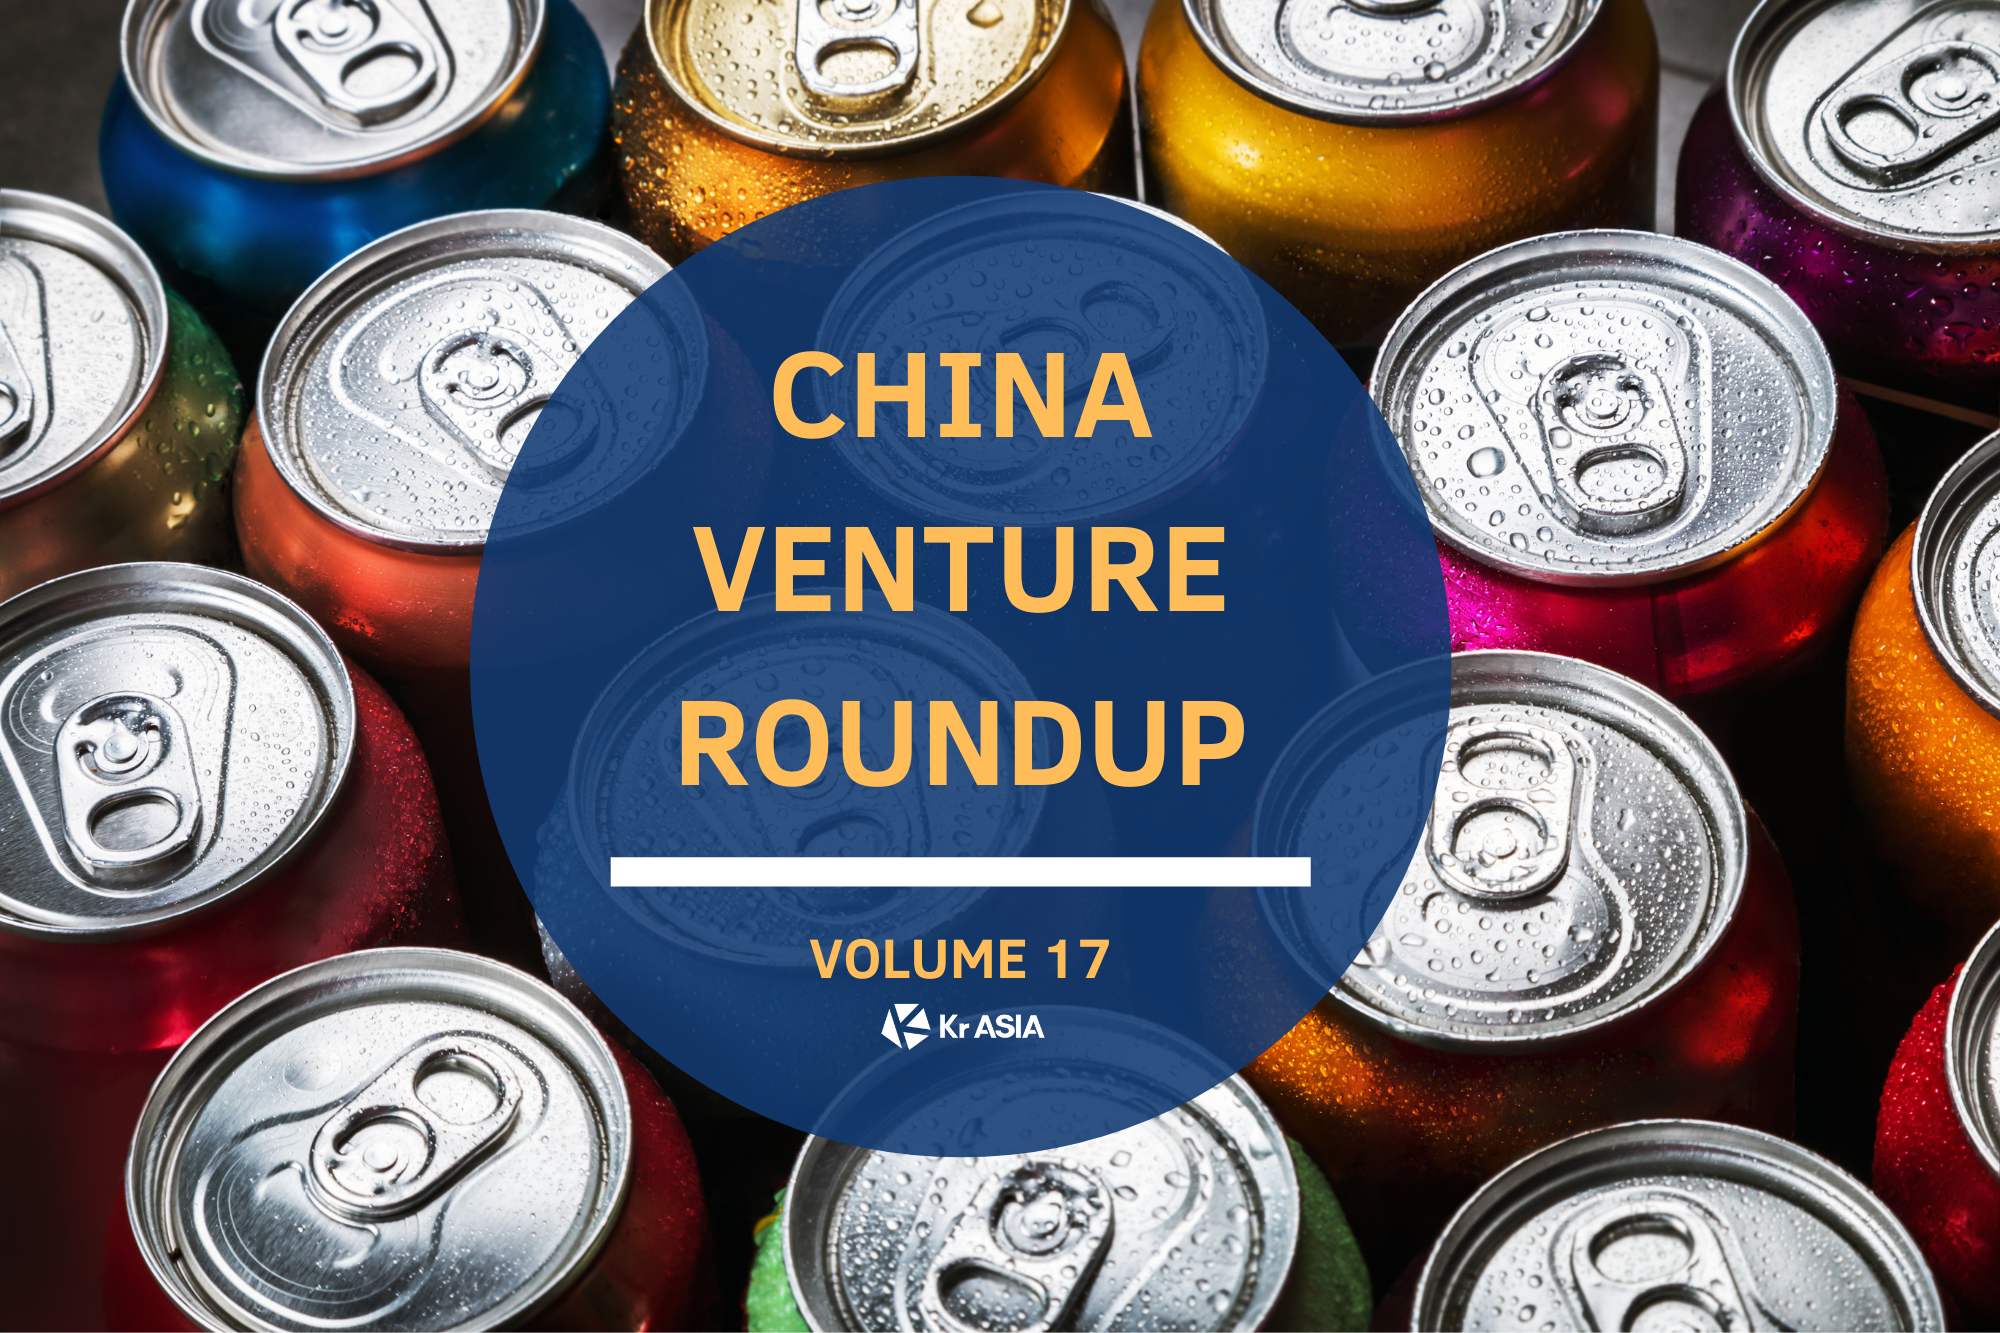 Beer drinkers: American versus Chinese | China Venture Roundup Volume 17